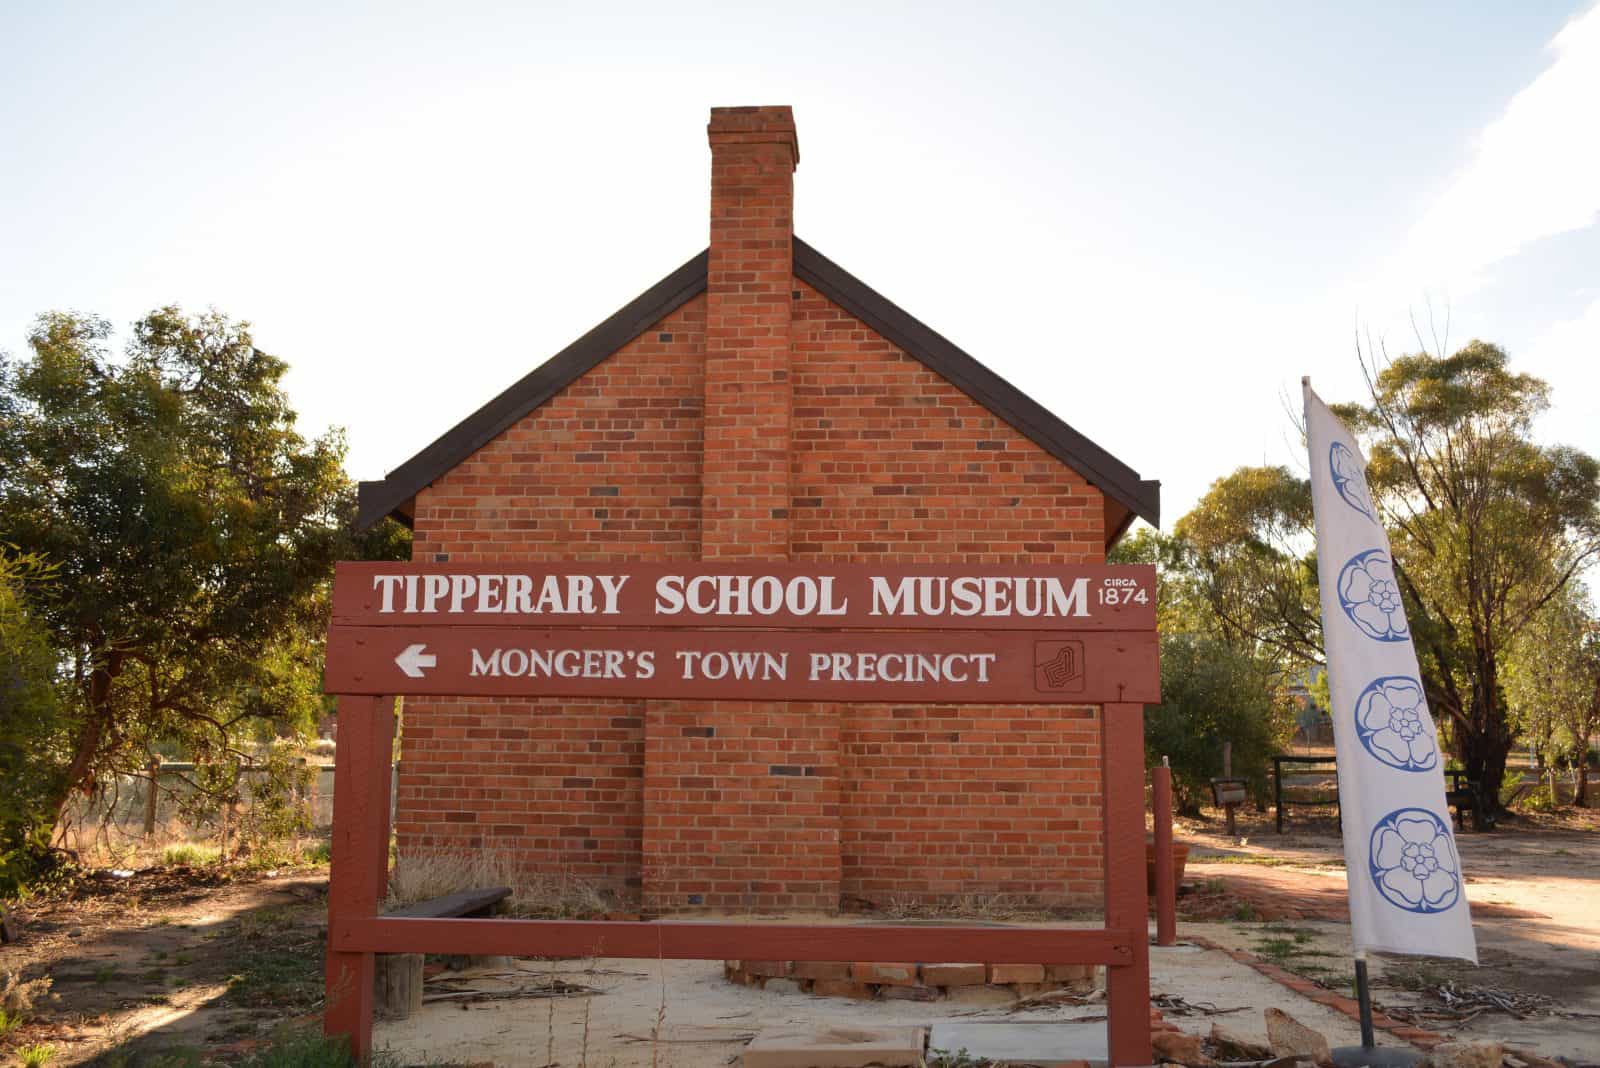 Old Sandalwood Yards and Tipperary School Museum, York, Western Australia